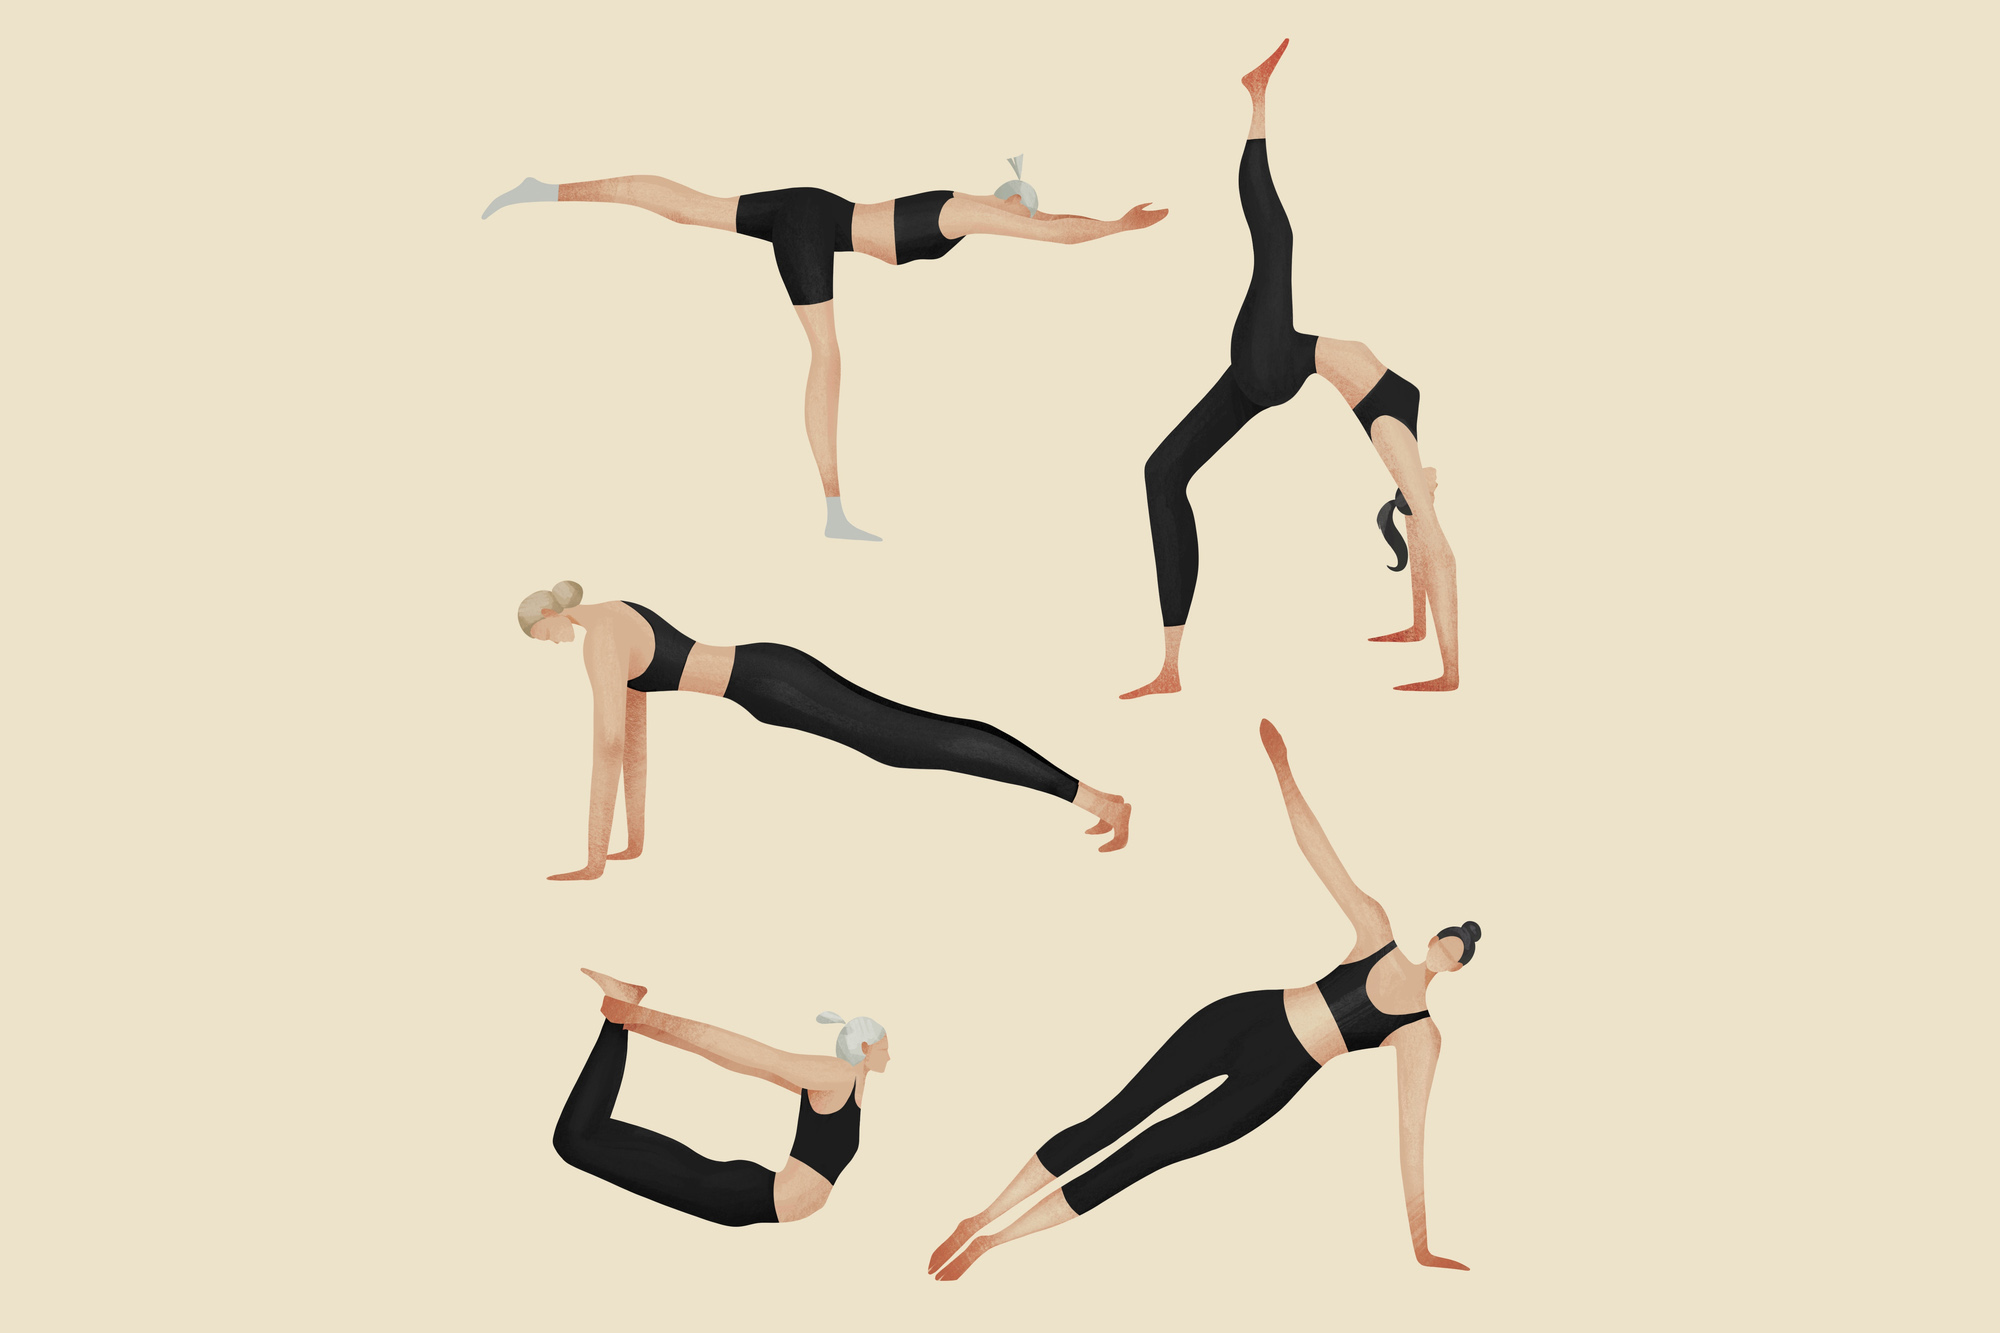 illustration of yoga poses